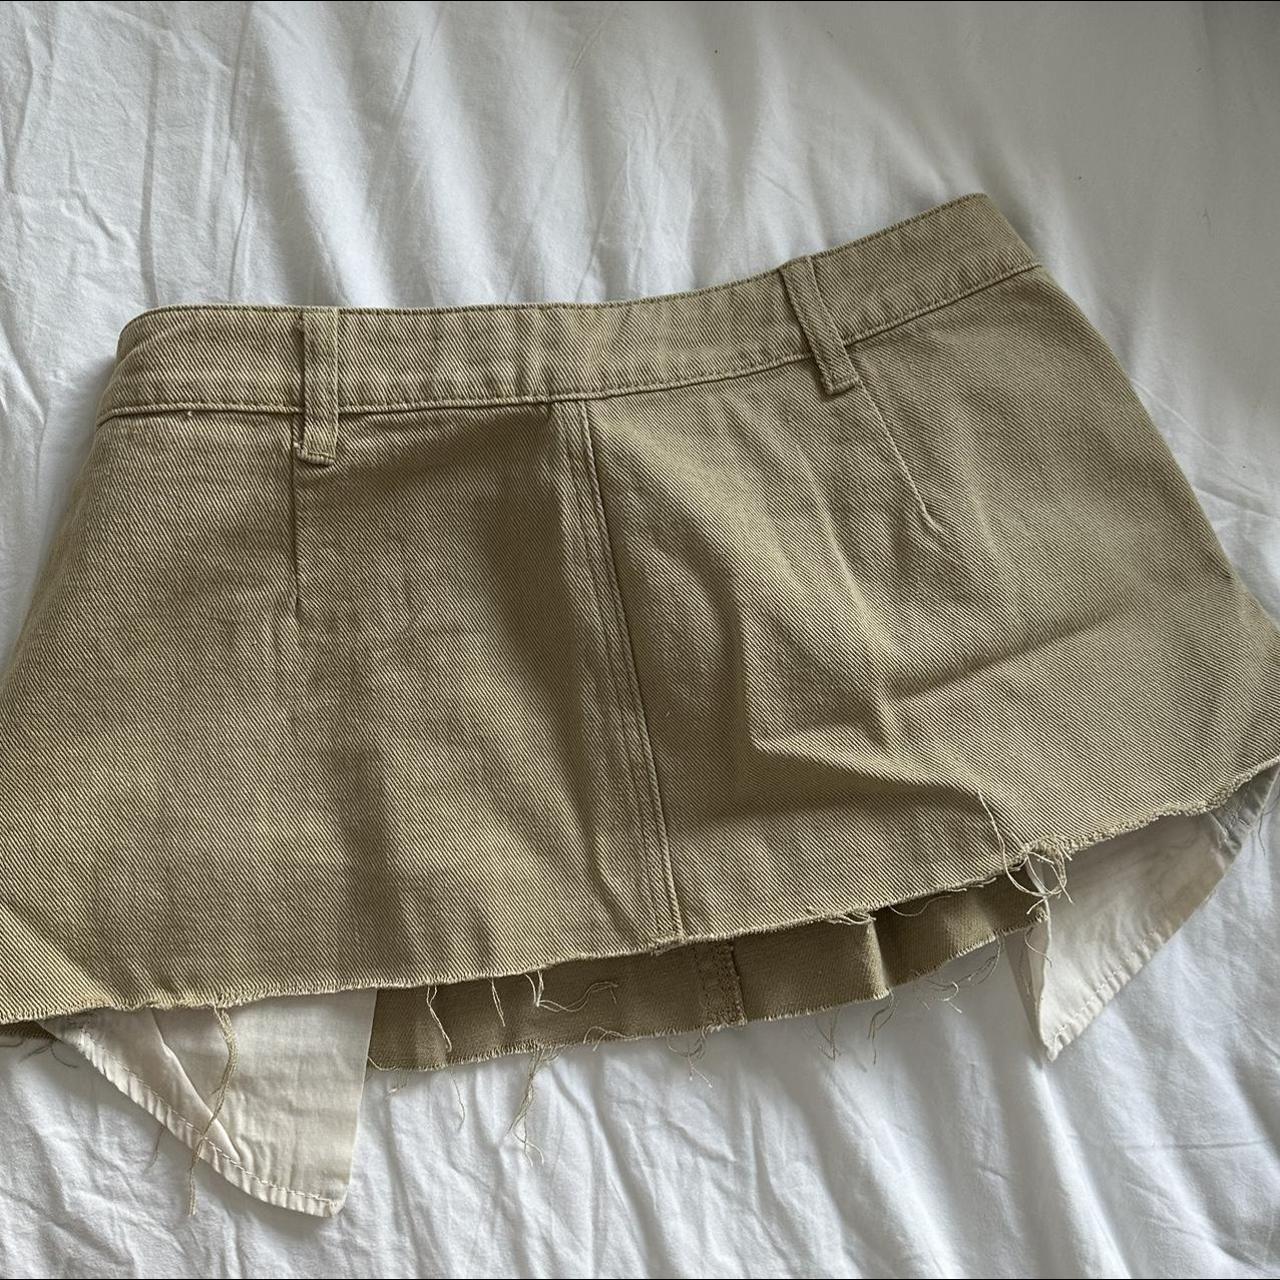 PLT Sand Low Rise Micro Mini Denim Skirt Bought but... - Depop